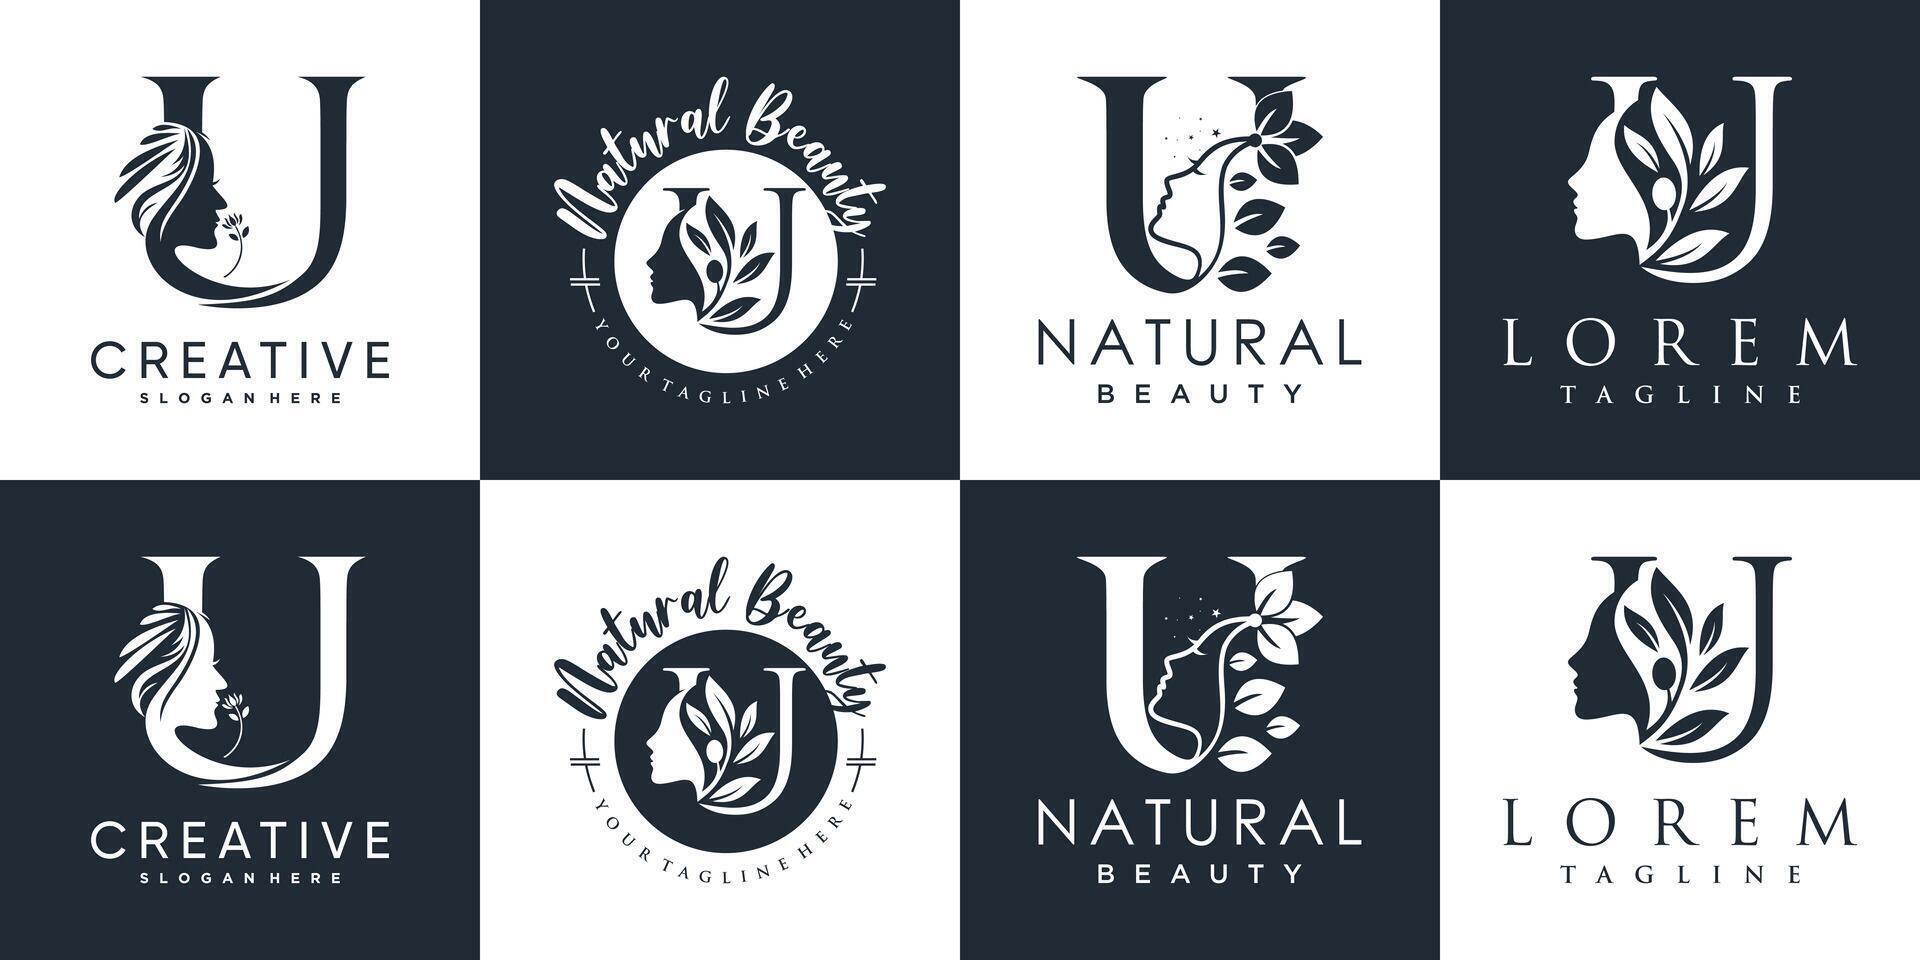 brev logotyp u design samling med natur skönhet begrepp premie vektor